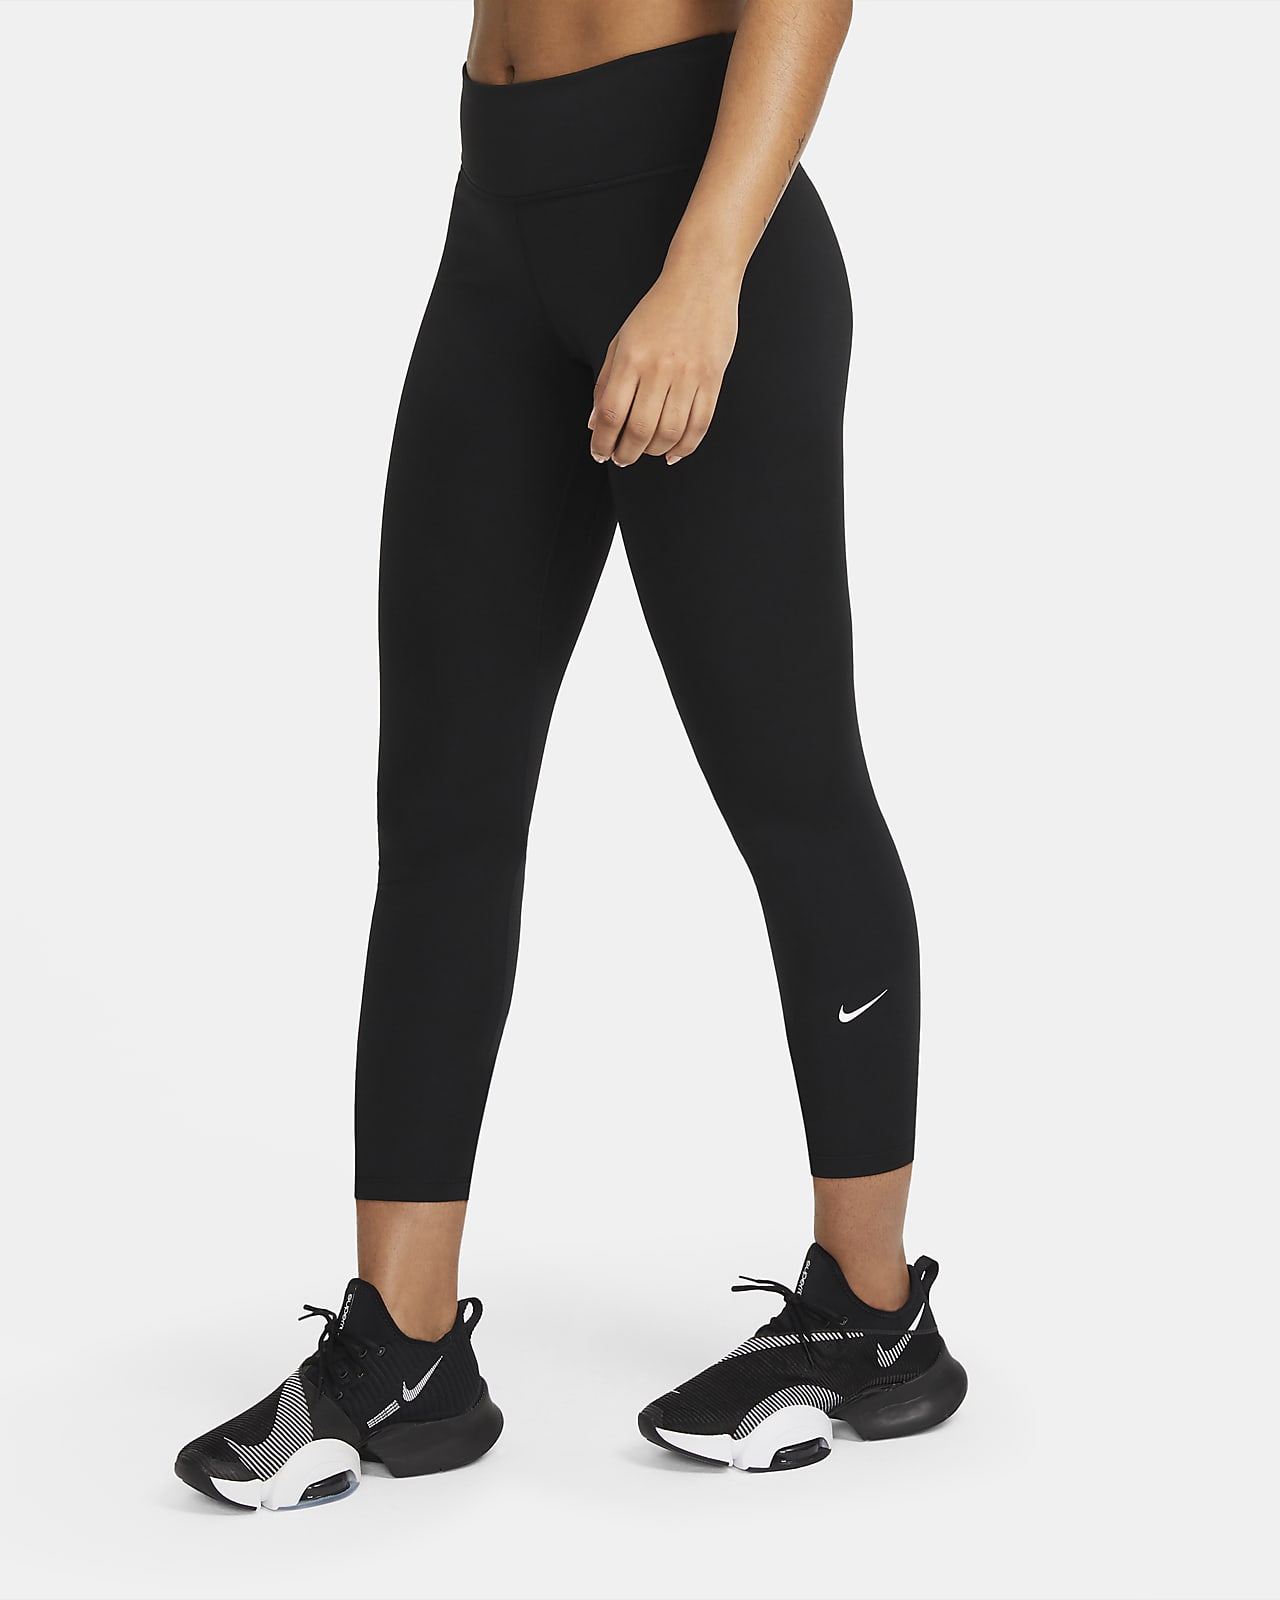 Legging court taille mi-basse Nike One pour Femme